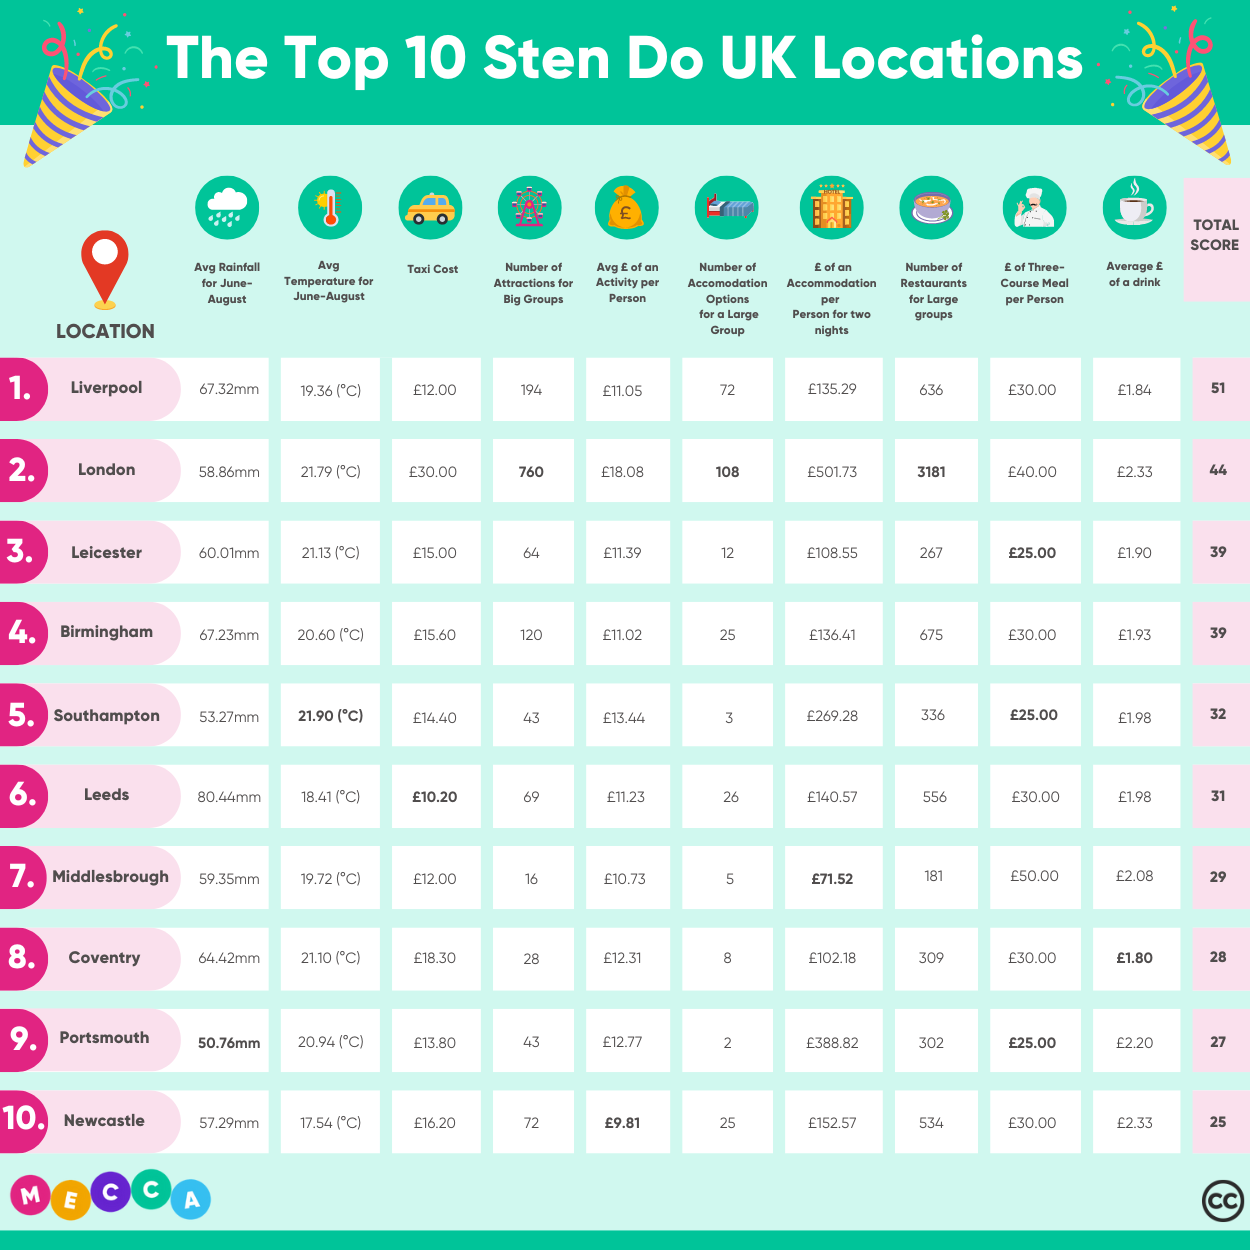 The Top 10 UK Sten Do Locations